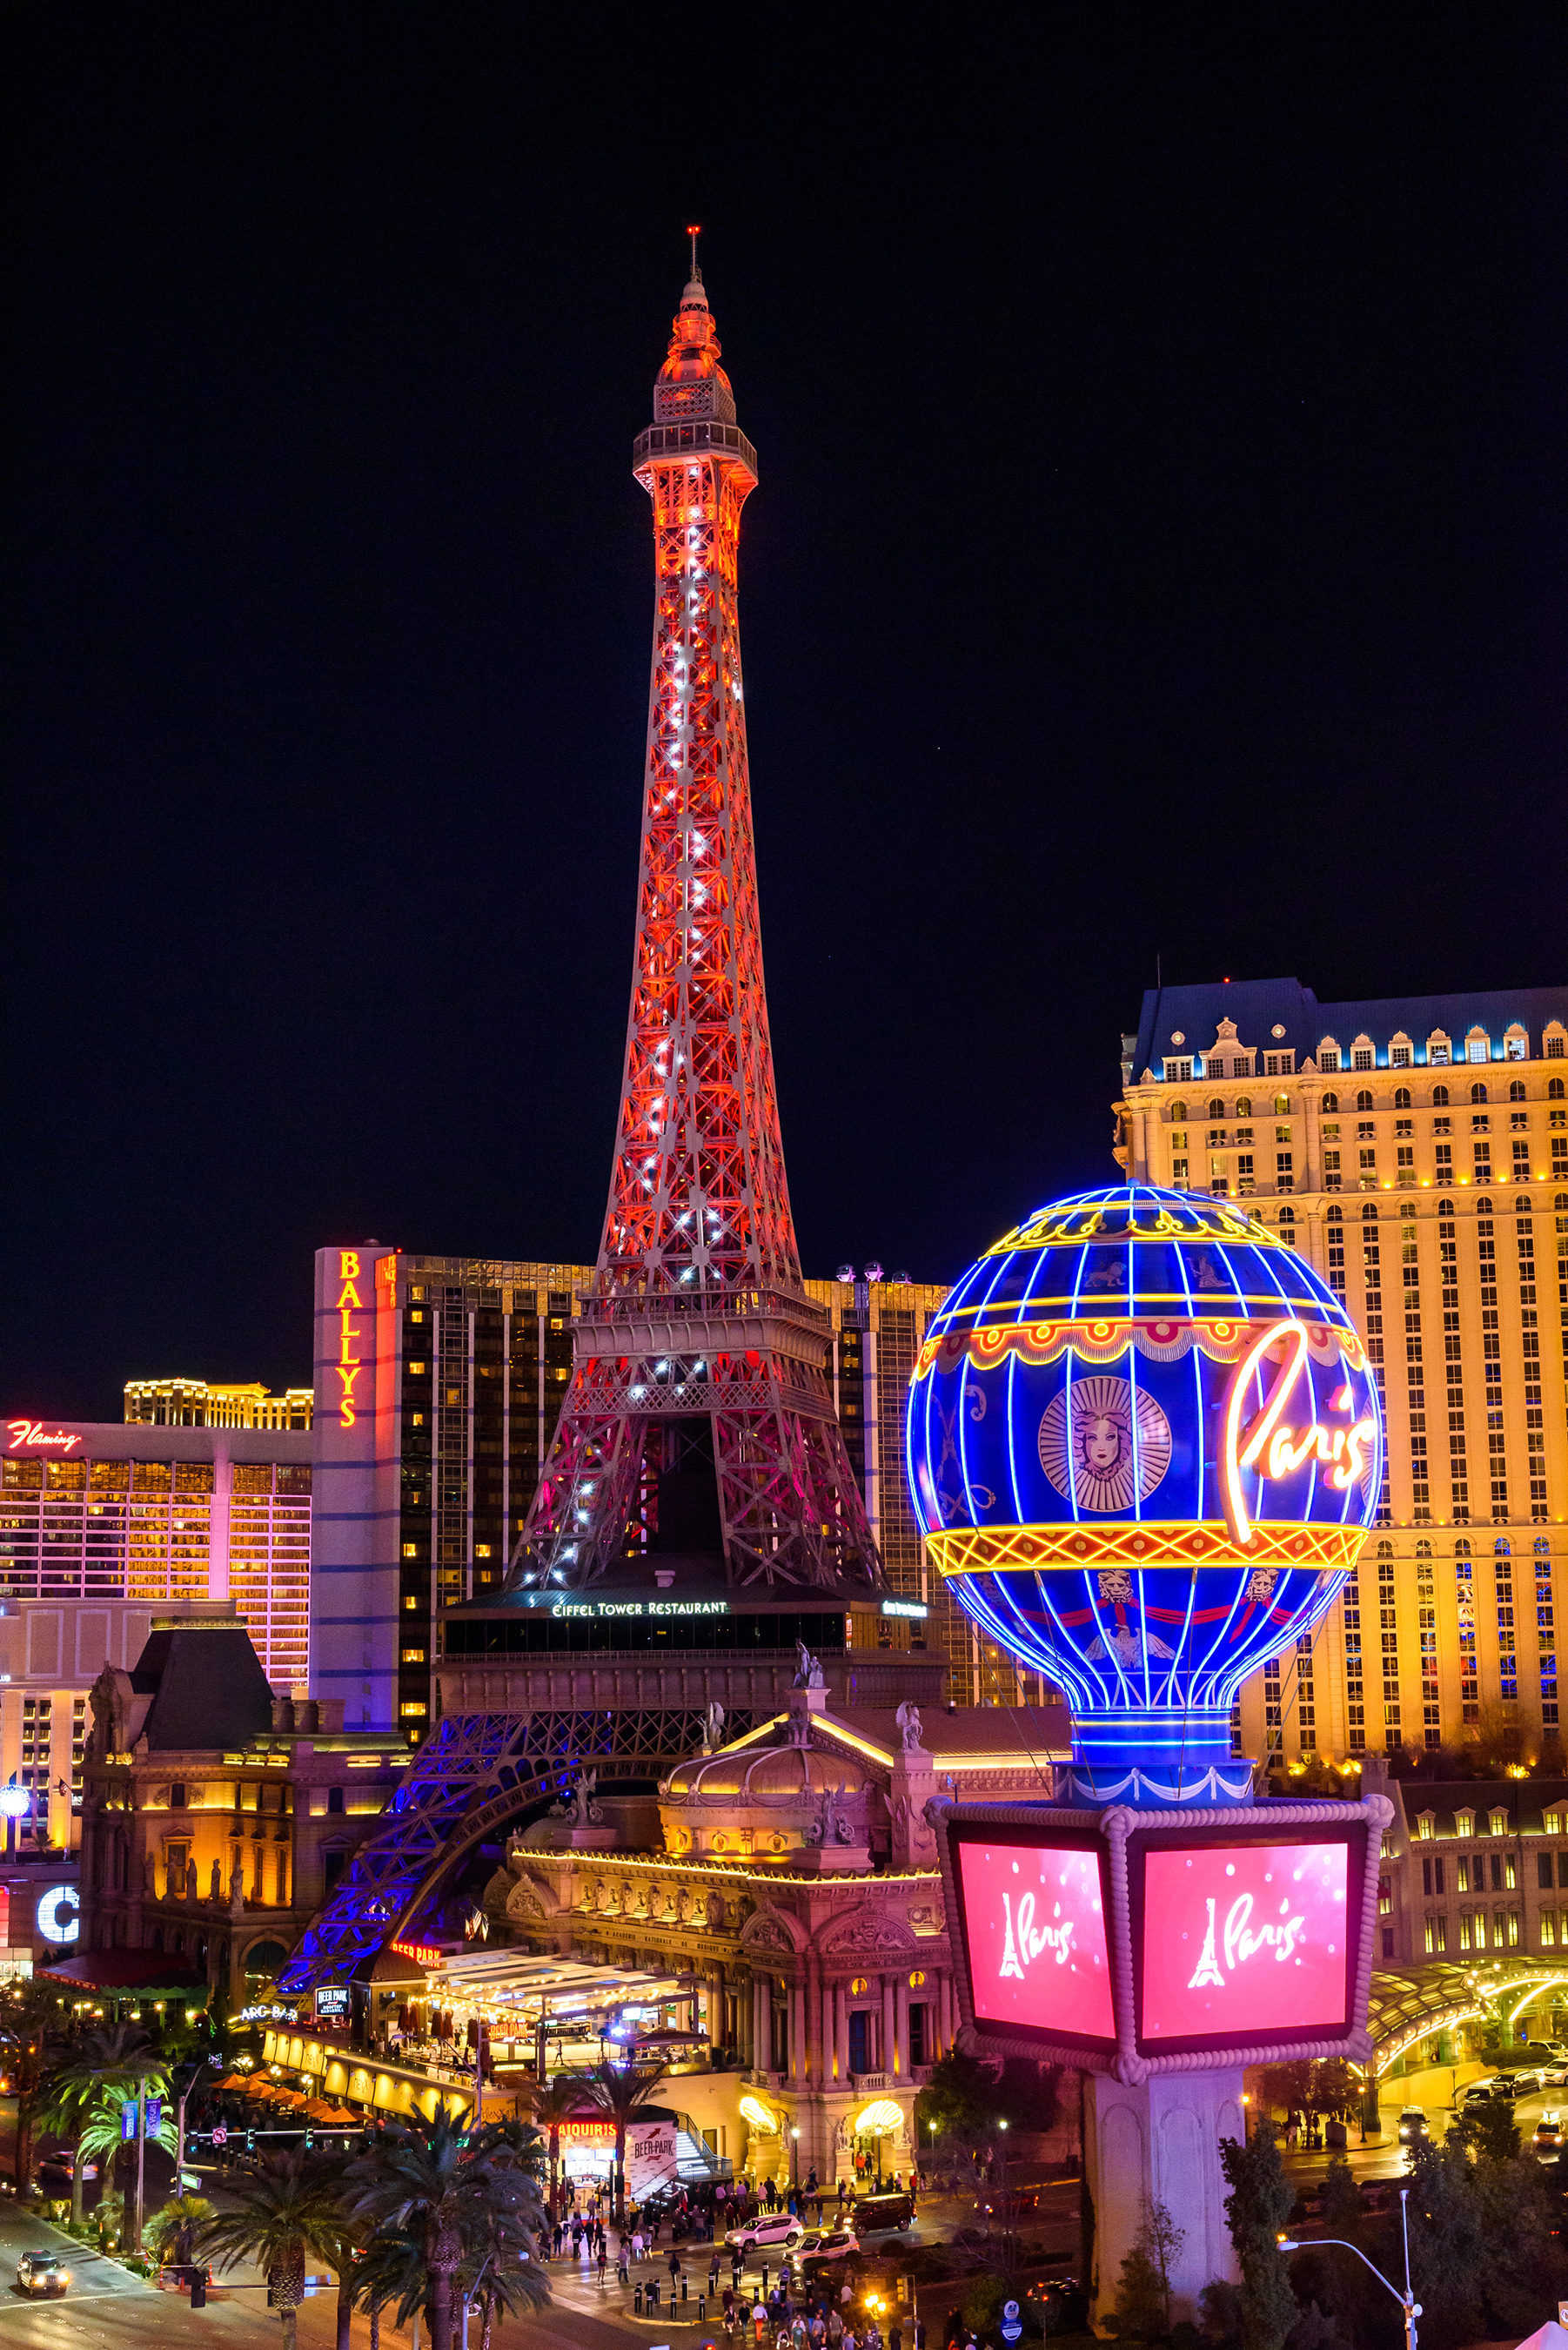 The Paris Vegas